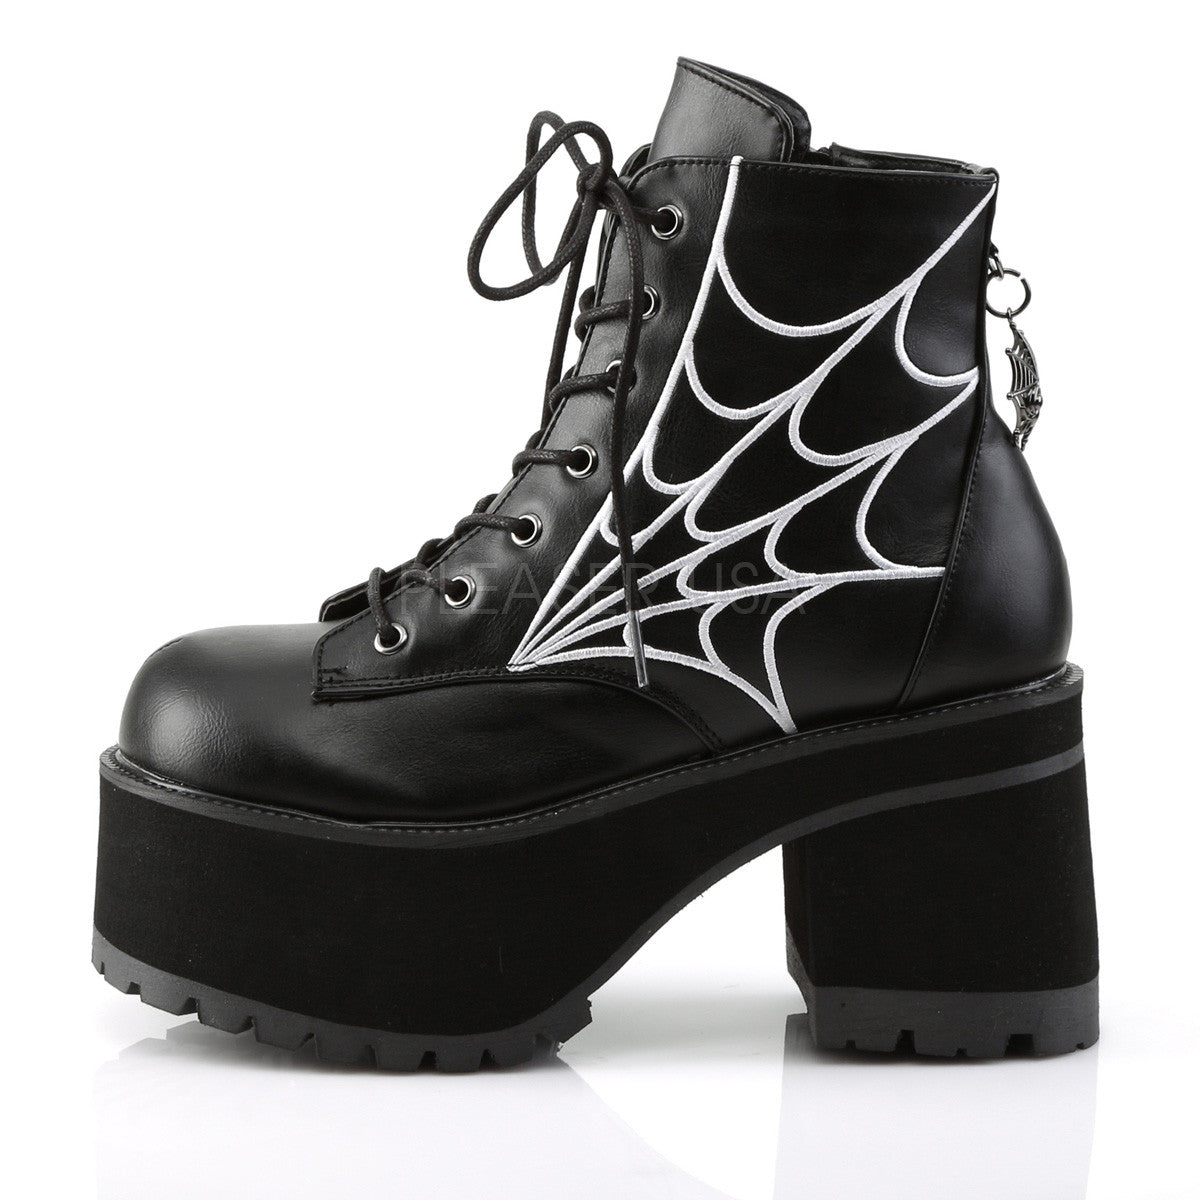 Demonia RANGER-105 Black Spider Web Platform Boots - Shoecup.com - 3